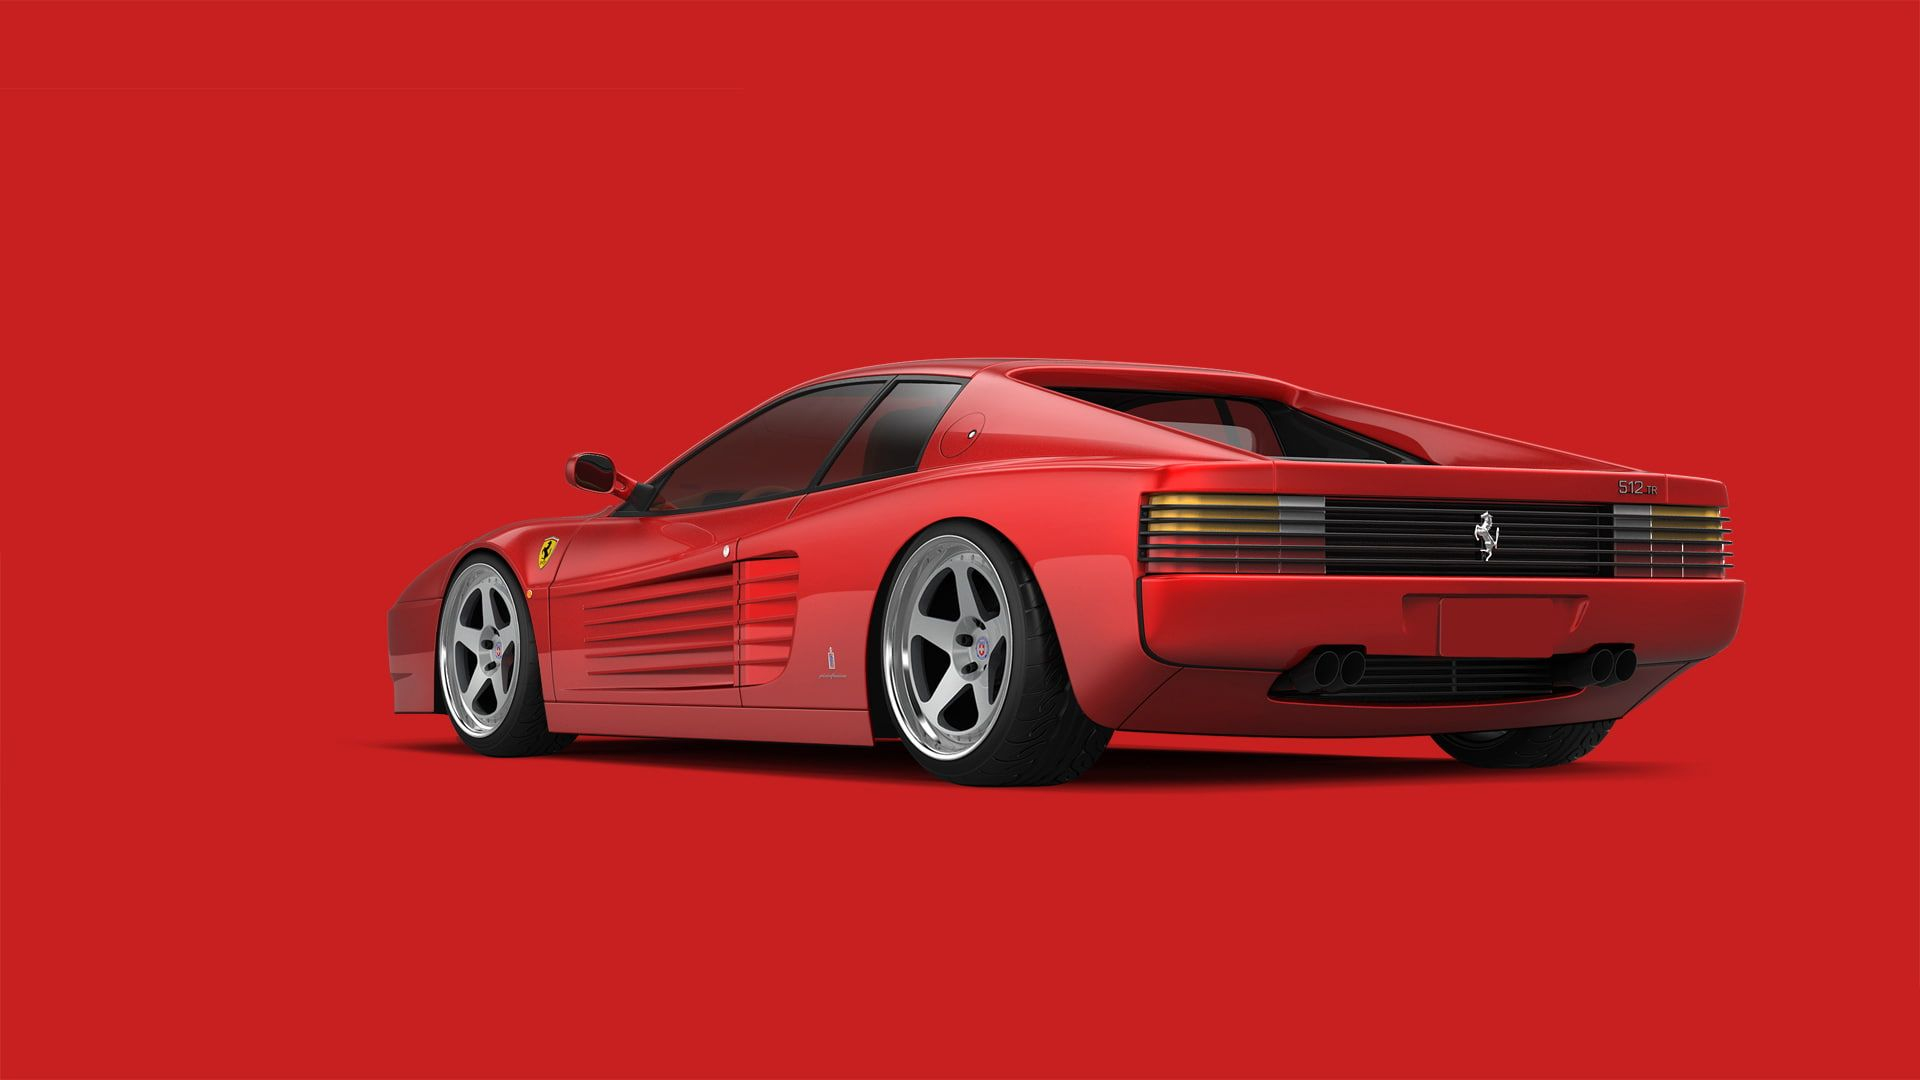 1920x1080 red #supercar #ferrari #testarossa 512 tr #1080P #wallpaper #hdwallpaper #desktop | Super cars, Ferrari, Classic cars